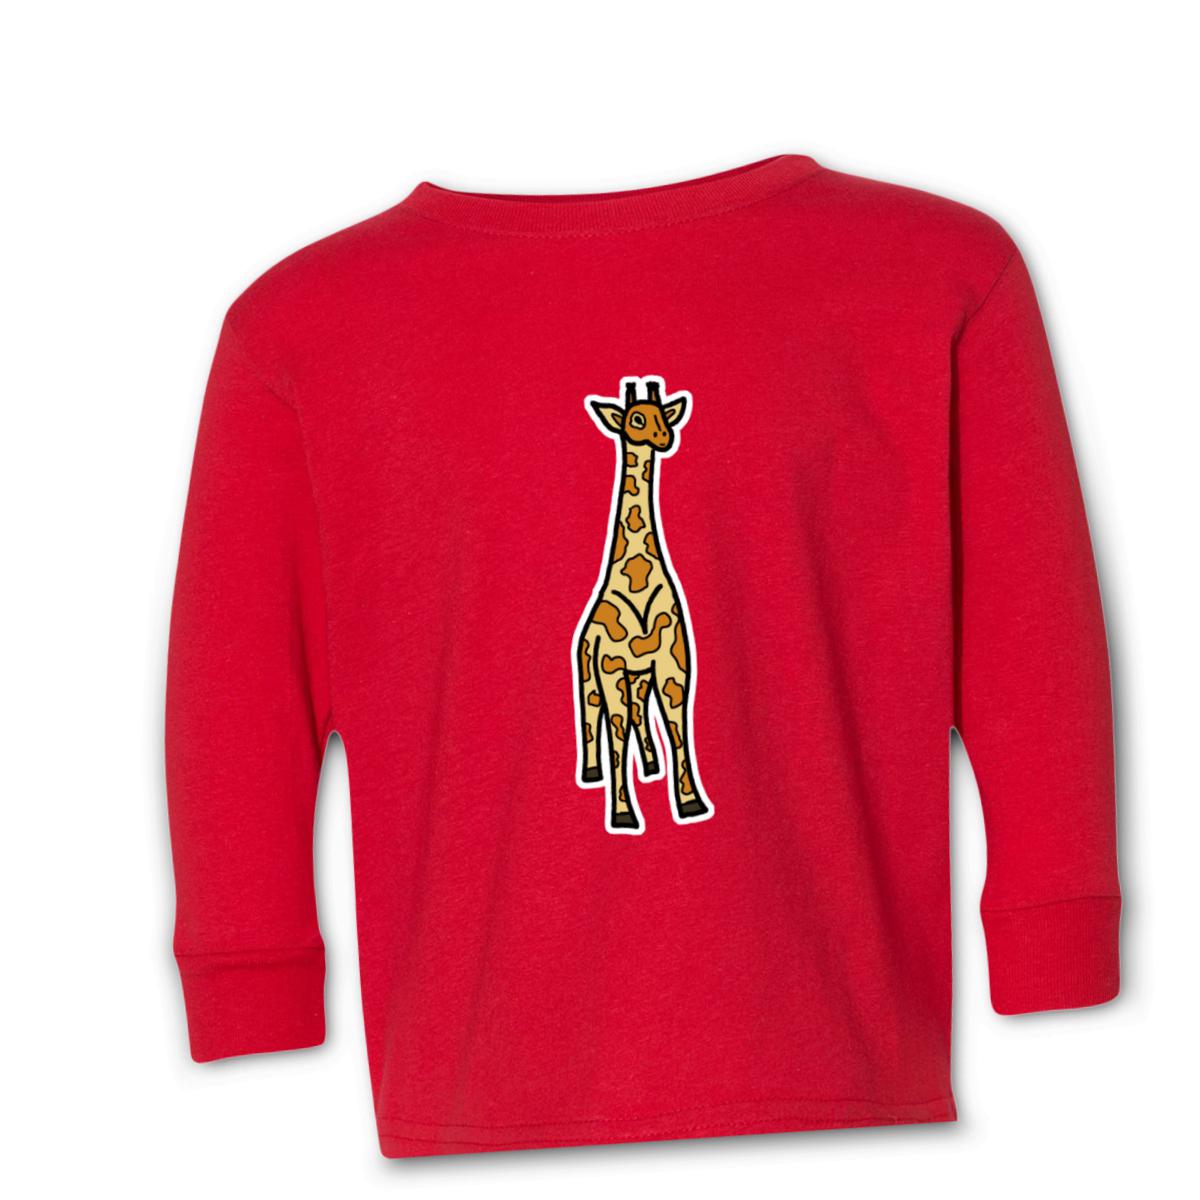 Toy Giraffe Kid's Long Sleeve Tee Large red